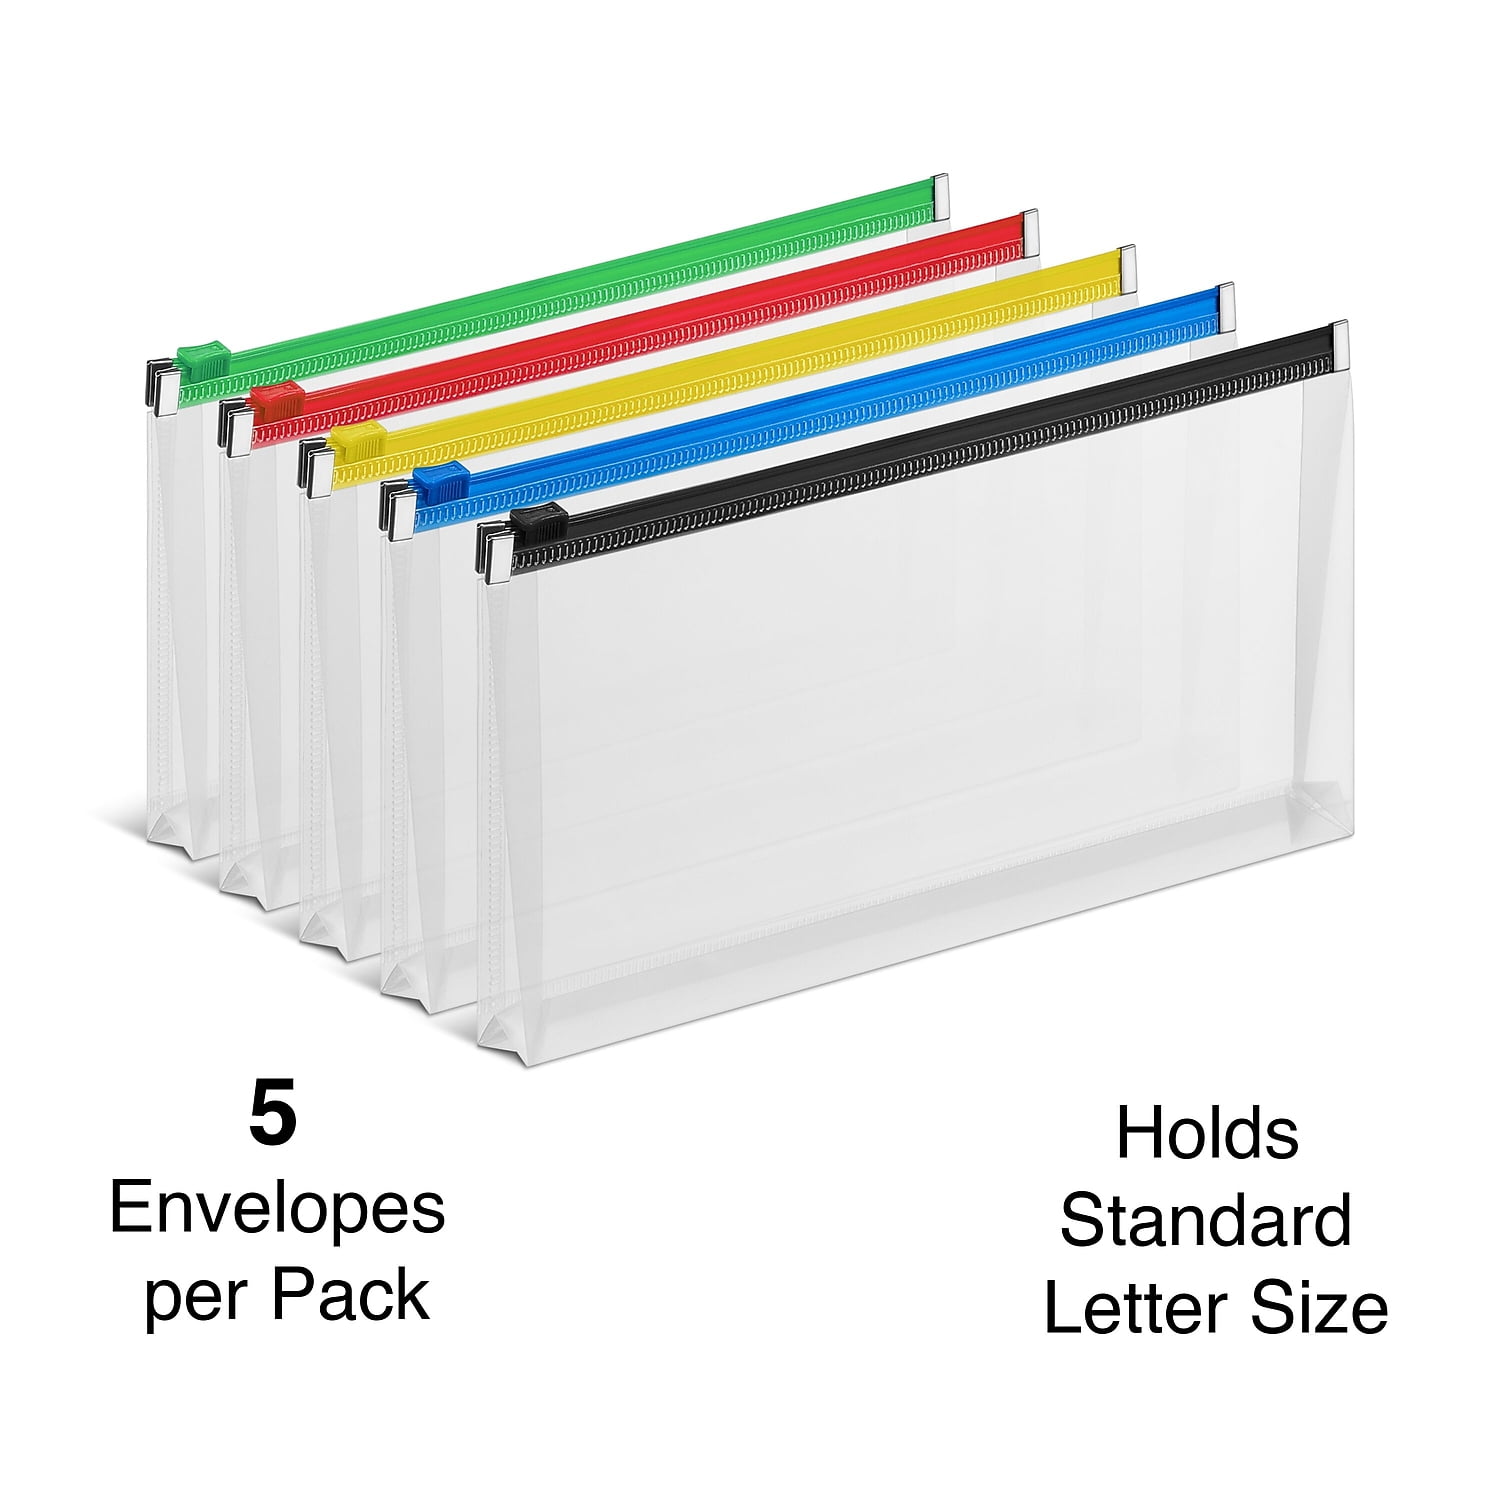 Envelope size guide - Staples®